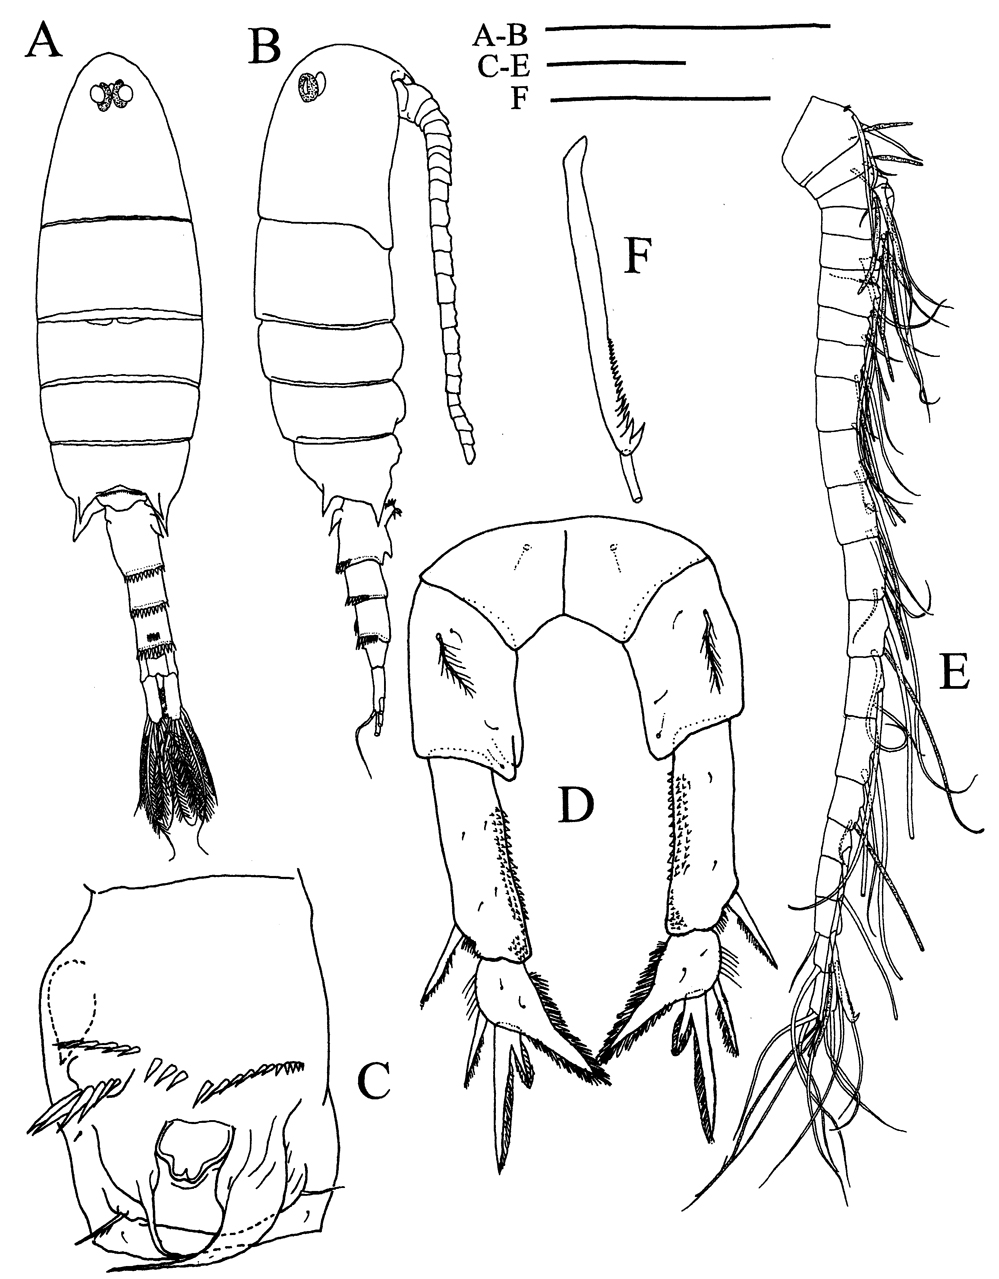 Species Pseudodiaptomus andamanensis - Plate 2 of morphological figures